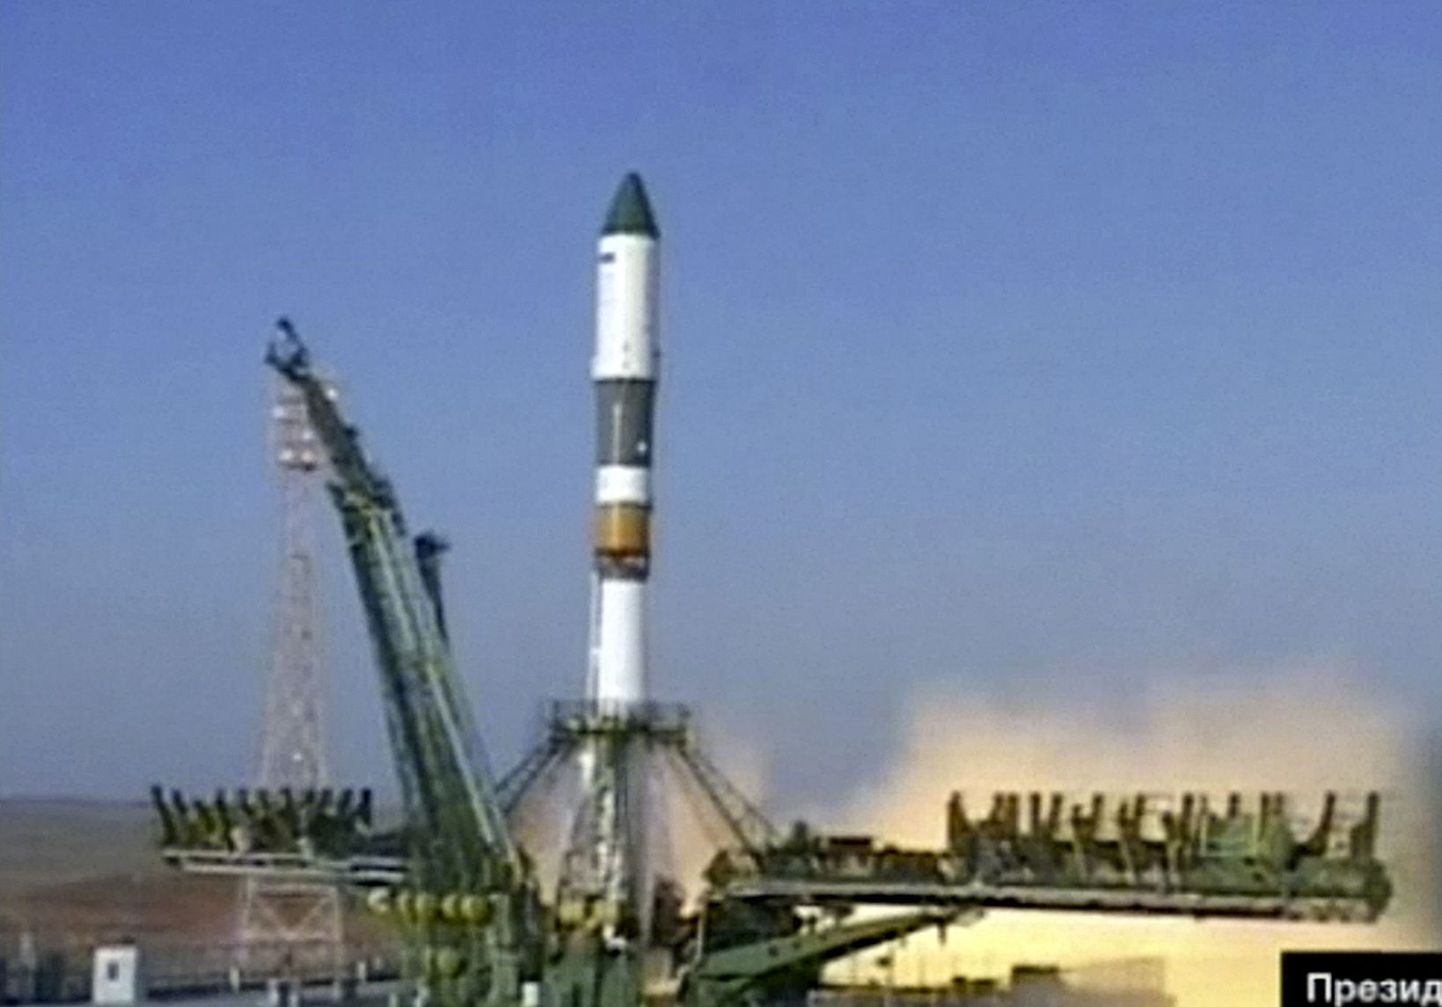 Sojuz kanderakett eilsel stardil Baikonuri kosmodroomil.